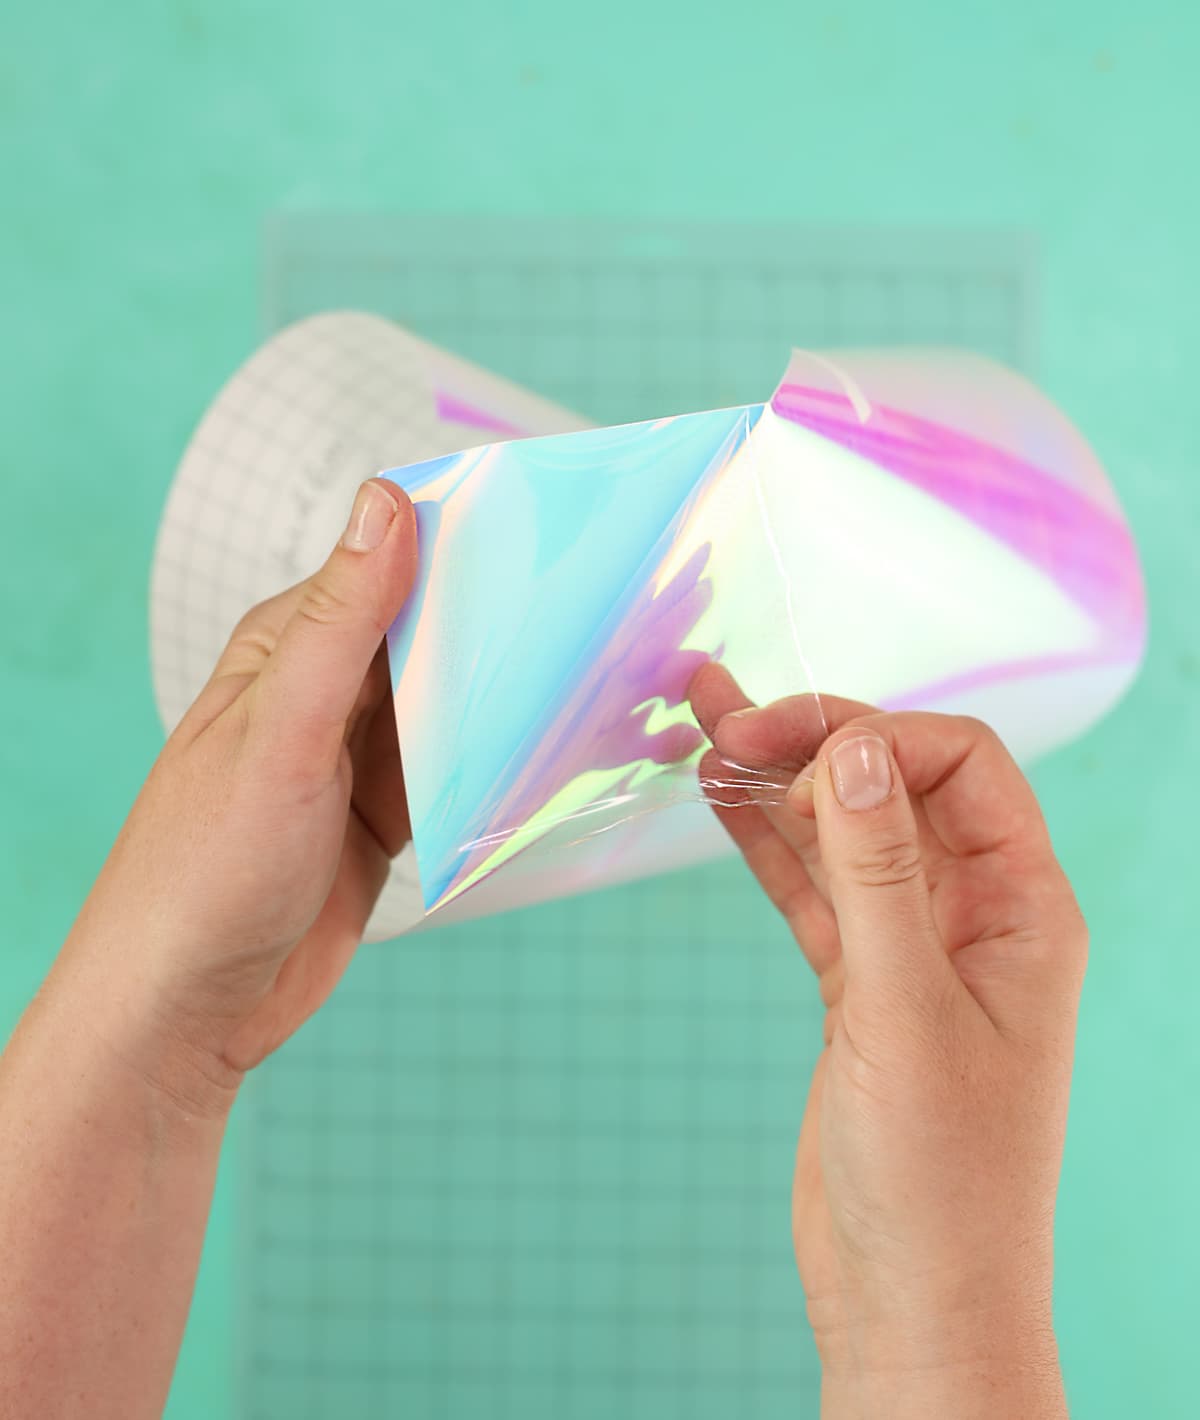 holographic opal adhesive vinyl